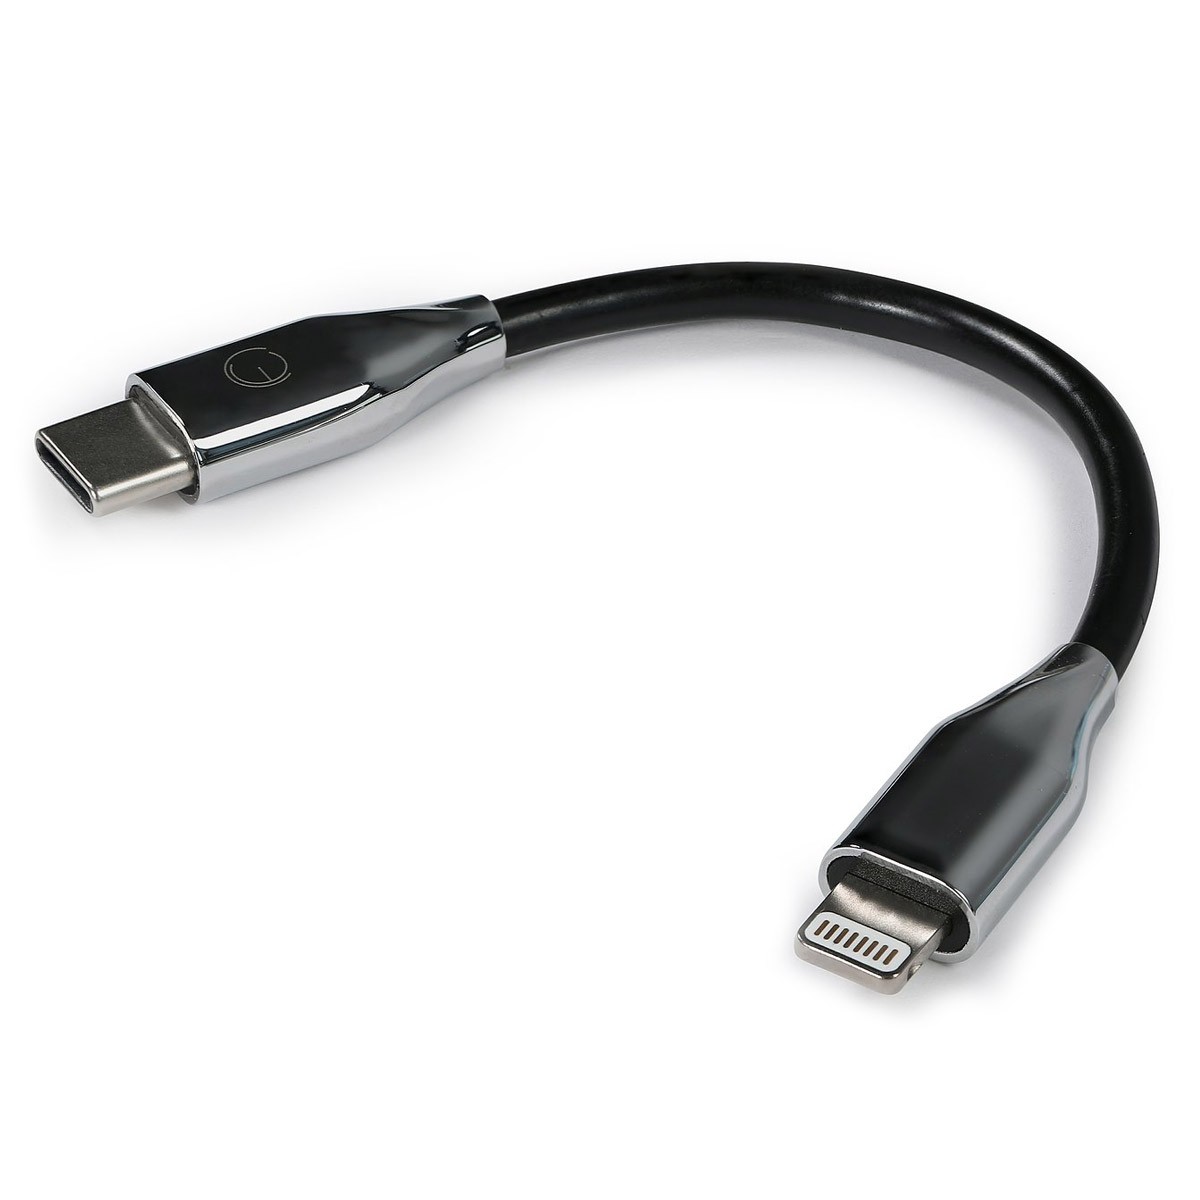 Adaptateur USB C OTG avec alimentation, USB C vers Maroc